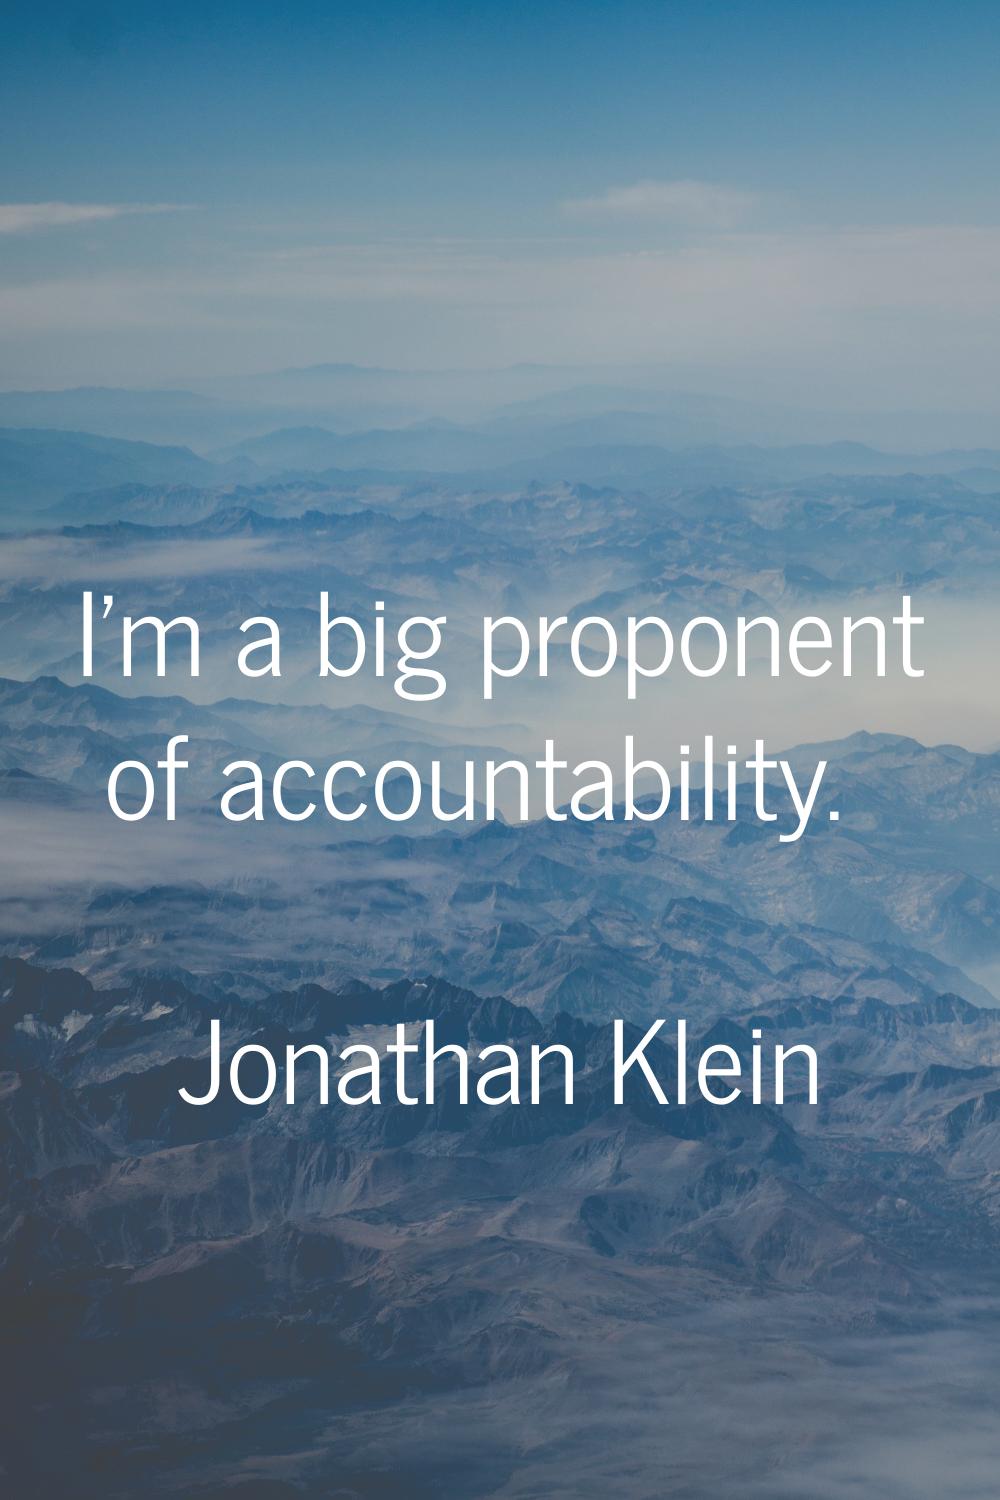 I'm a big proponent of accountability.